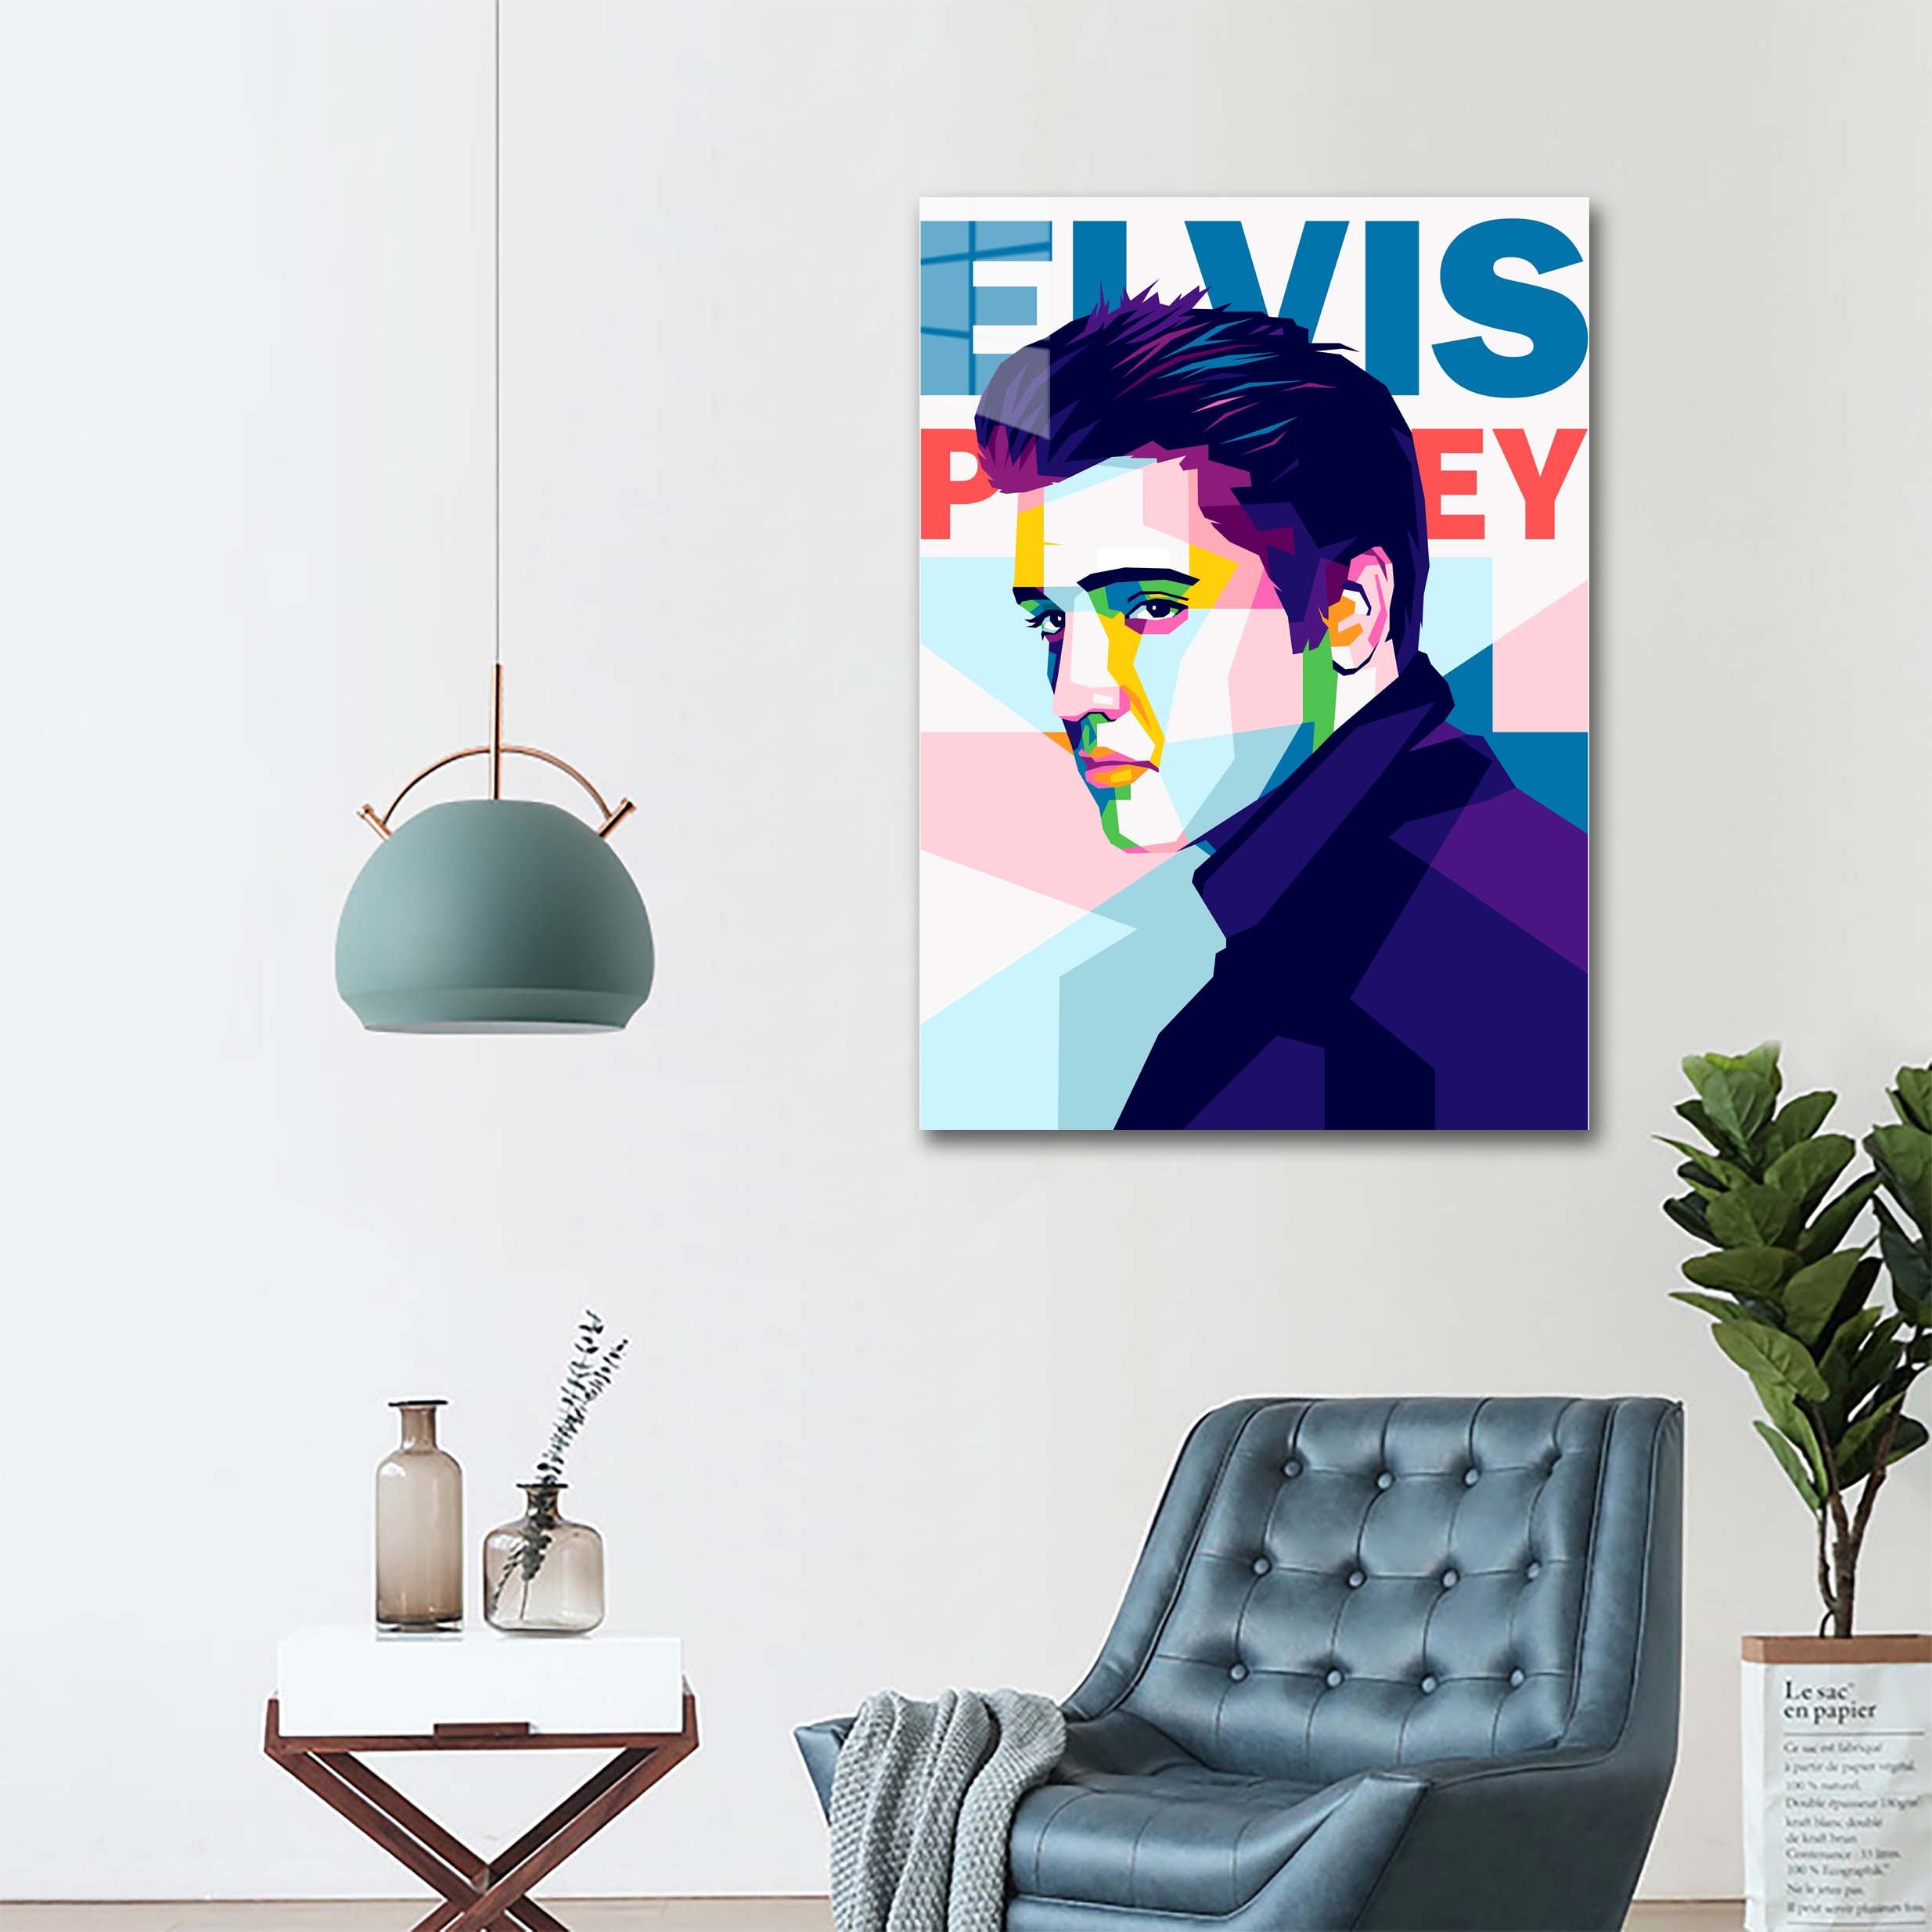 Elvis_Presley-02-designed by @Wpapmalang